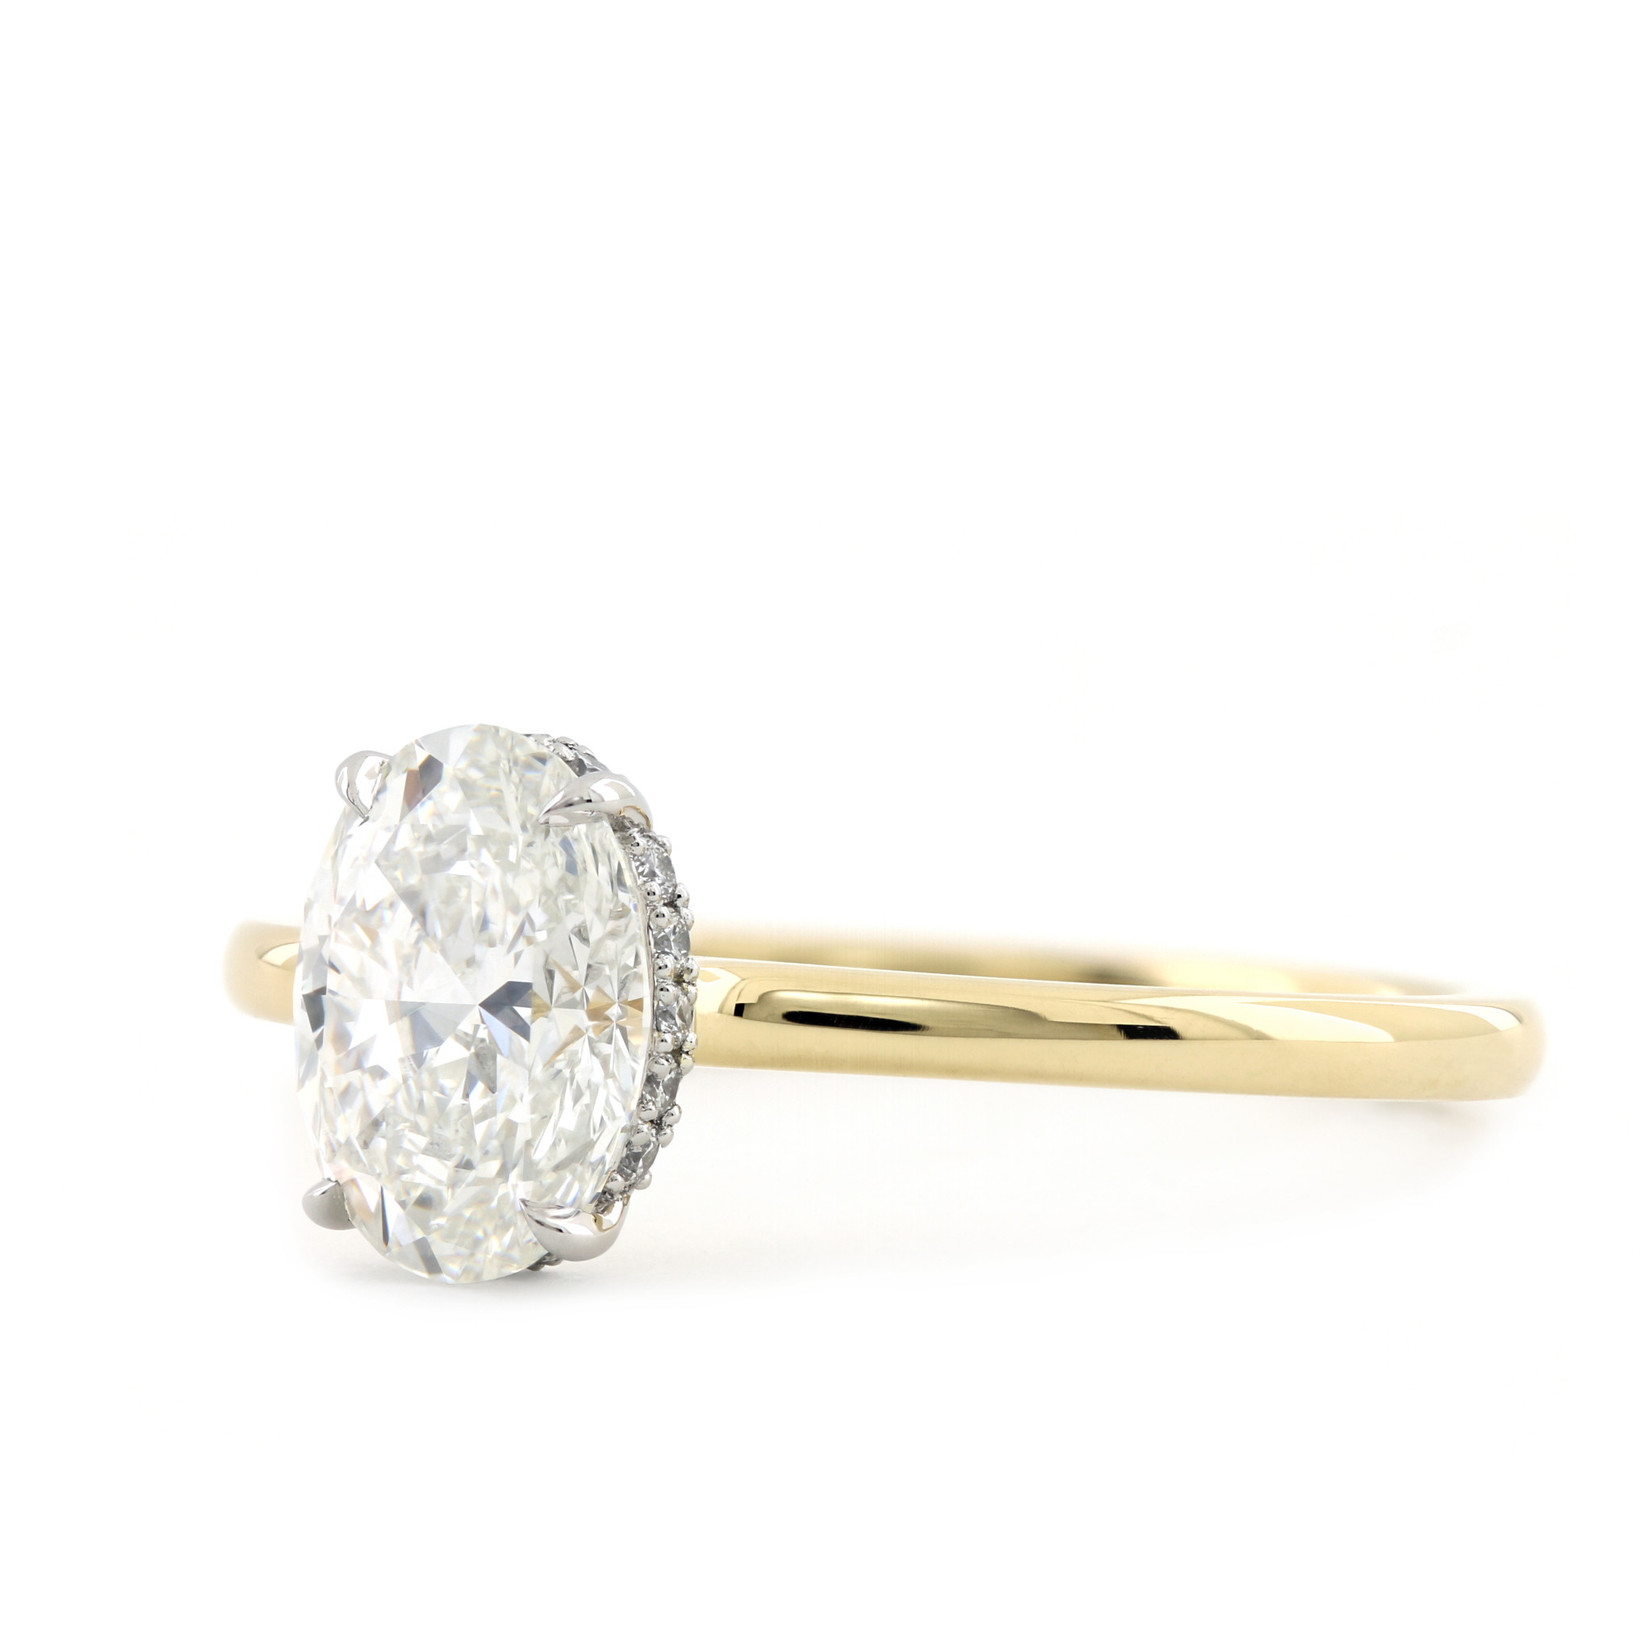 Baxter Moerman Gwen Ring with Oval Diamond